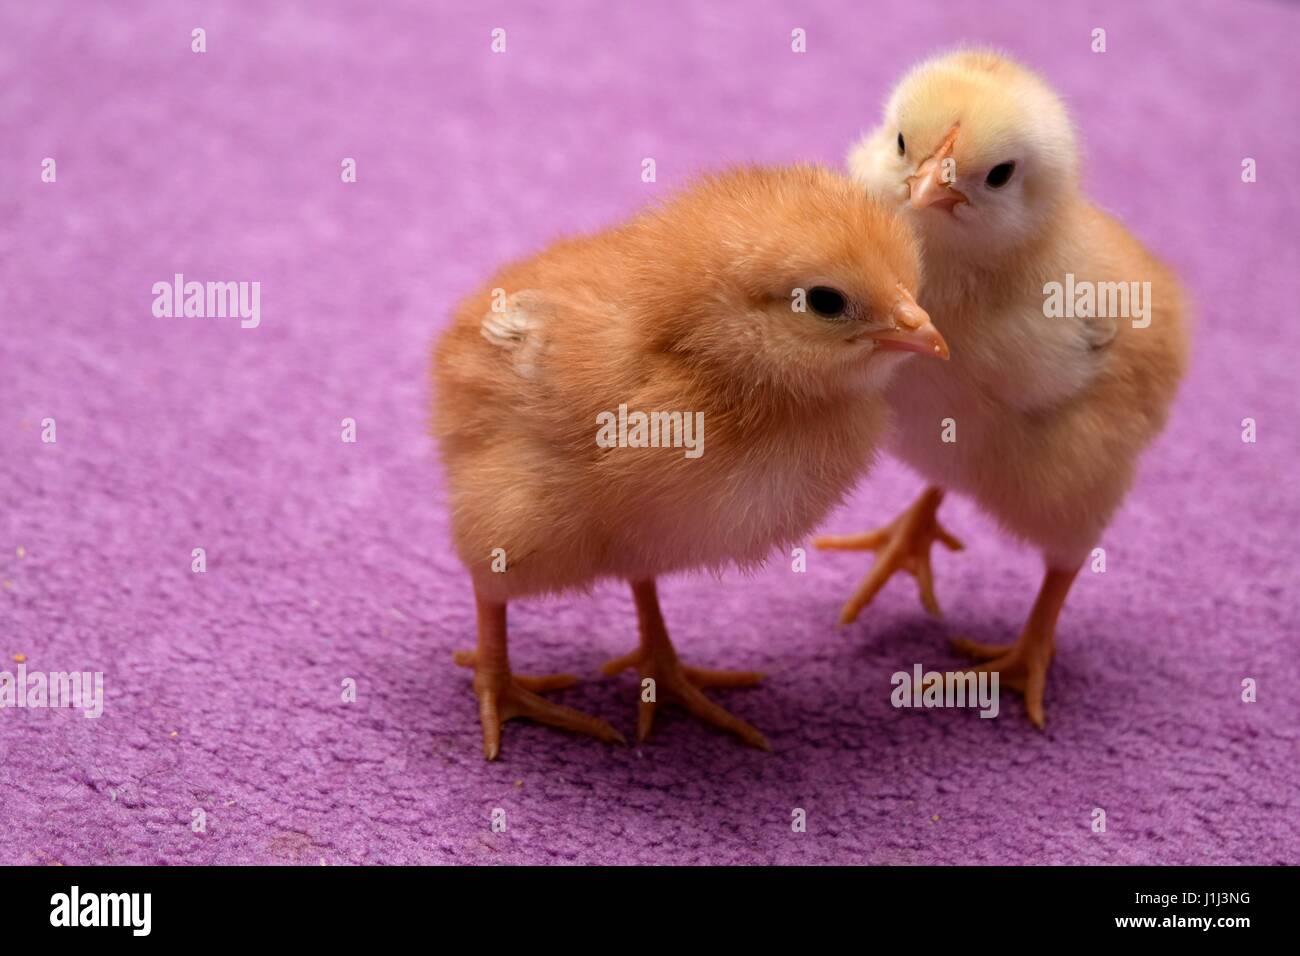 Baby Hühner auf einem lila Boden Stockfoto